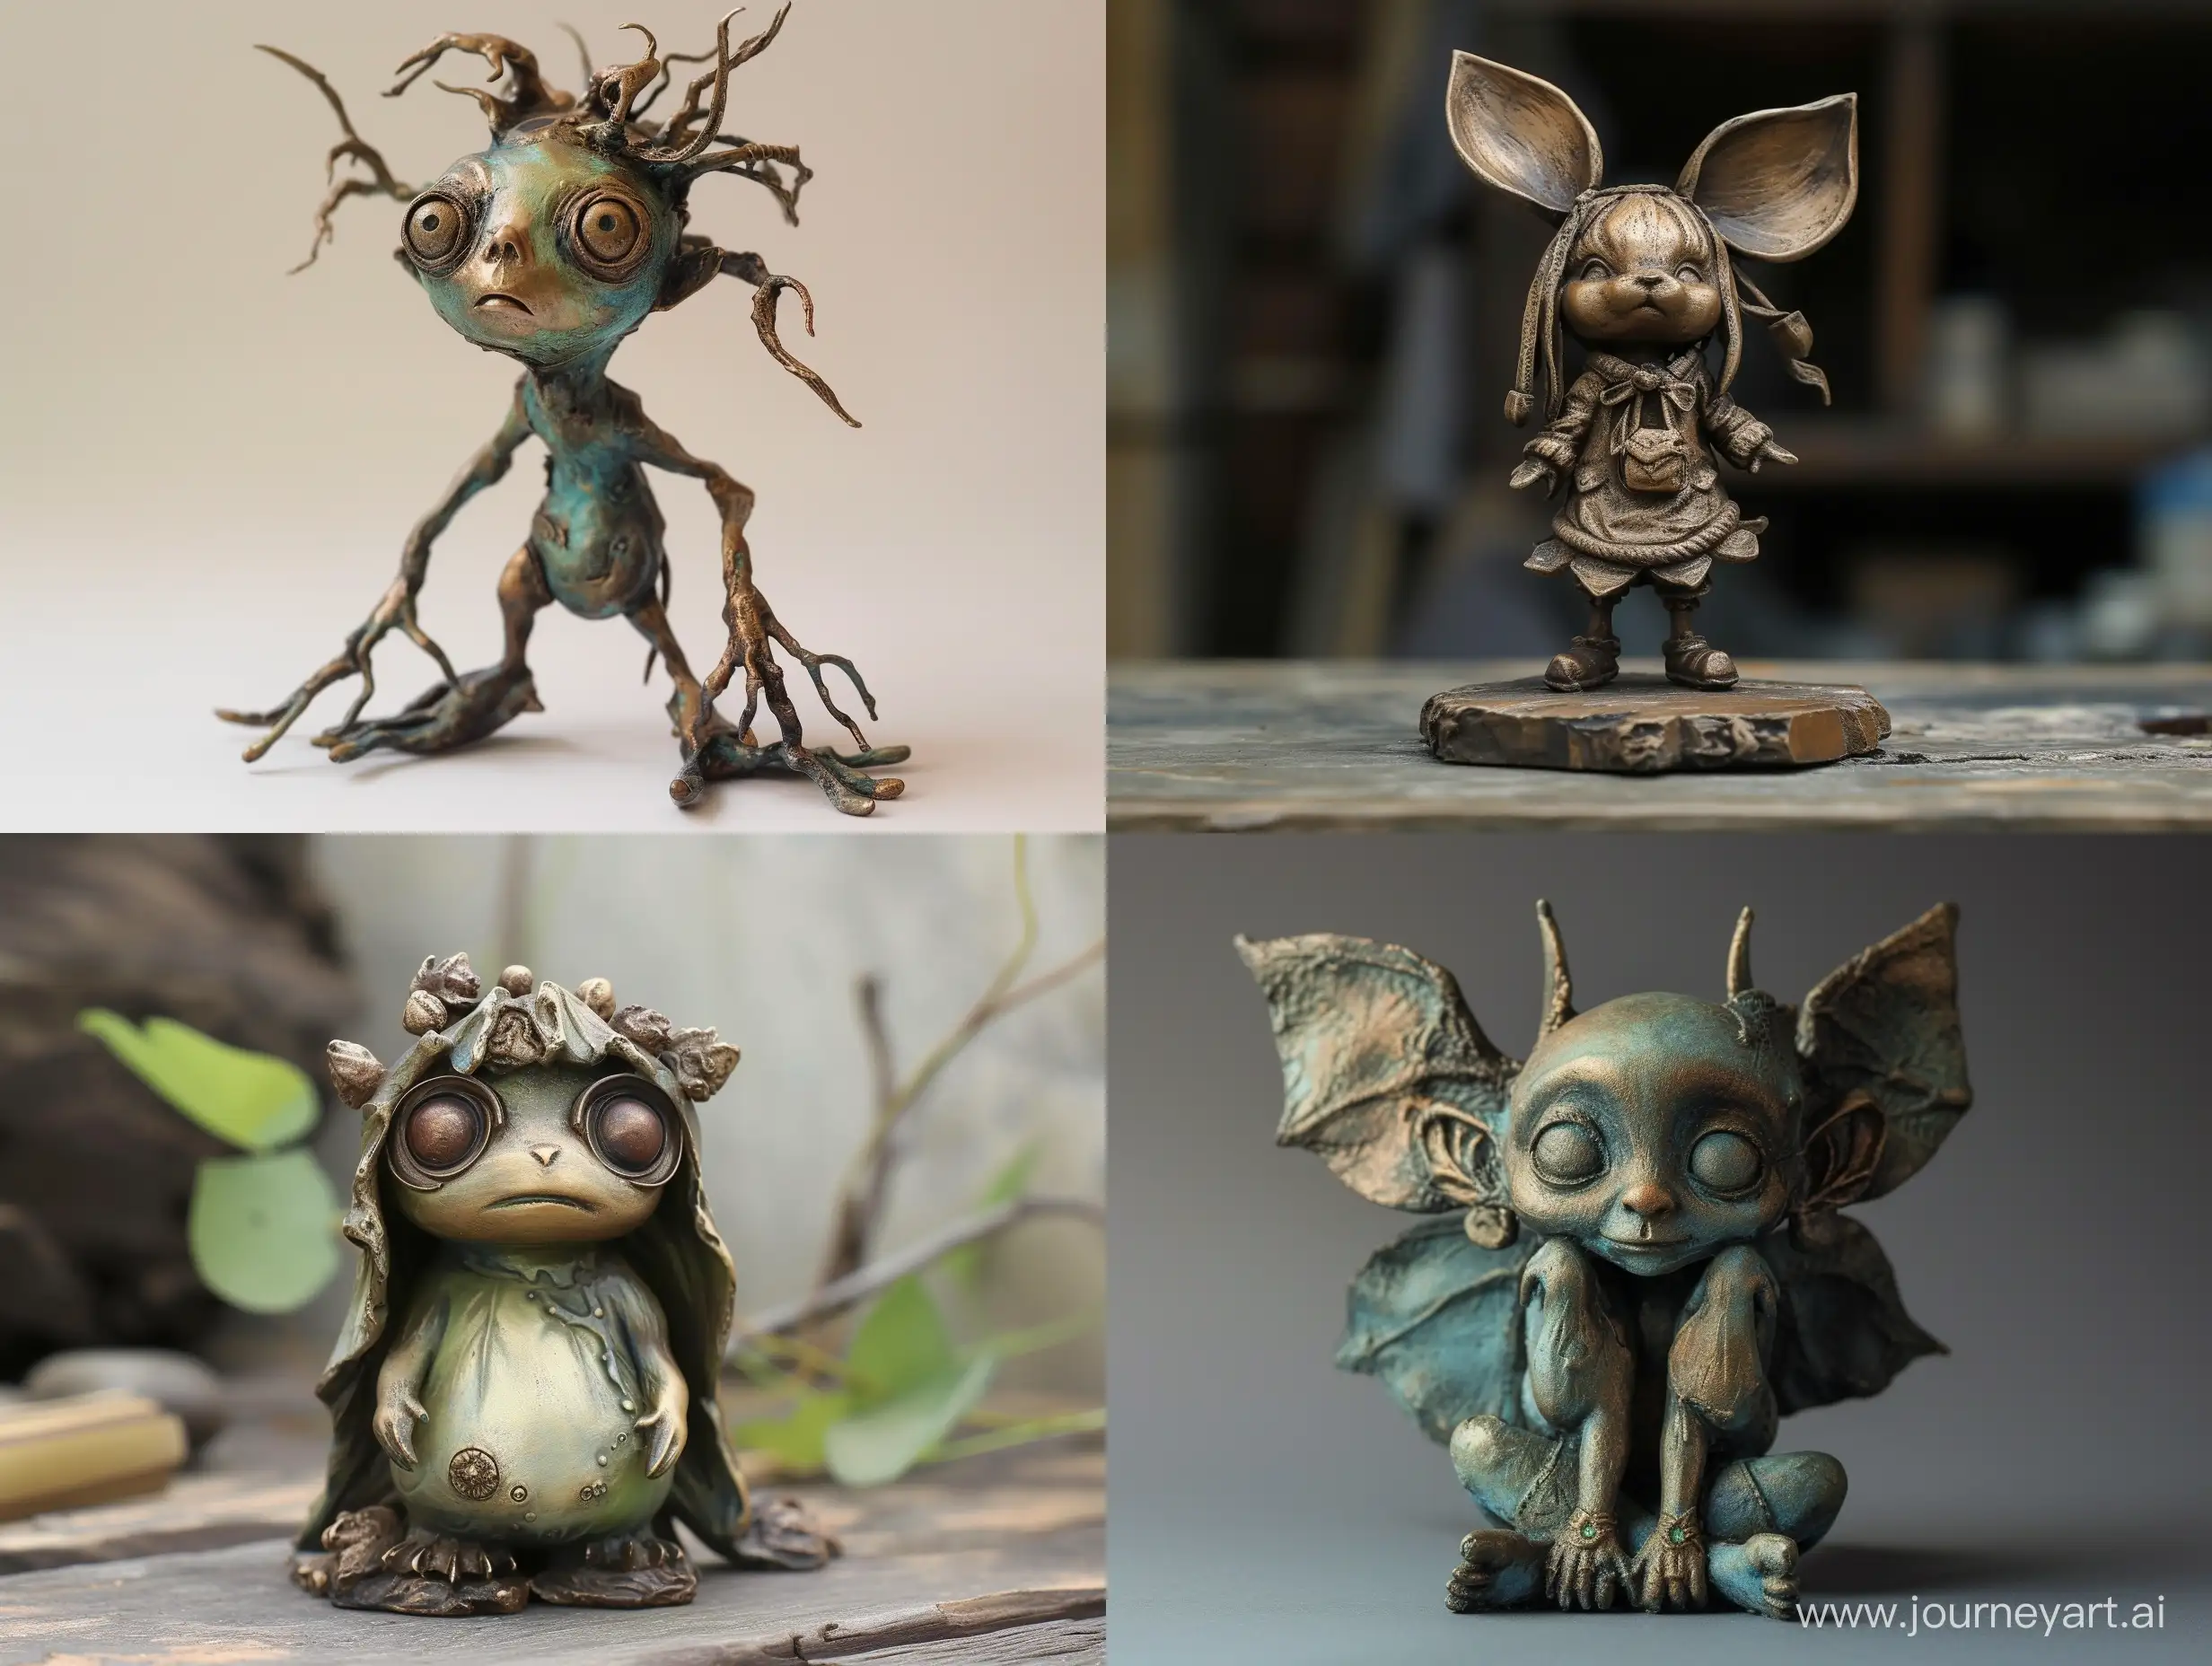 Adorable-NonExistent-FairyTale-Character-Figurine-in-Bronze-Art